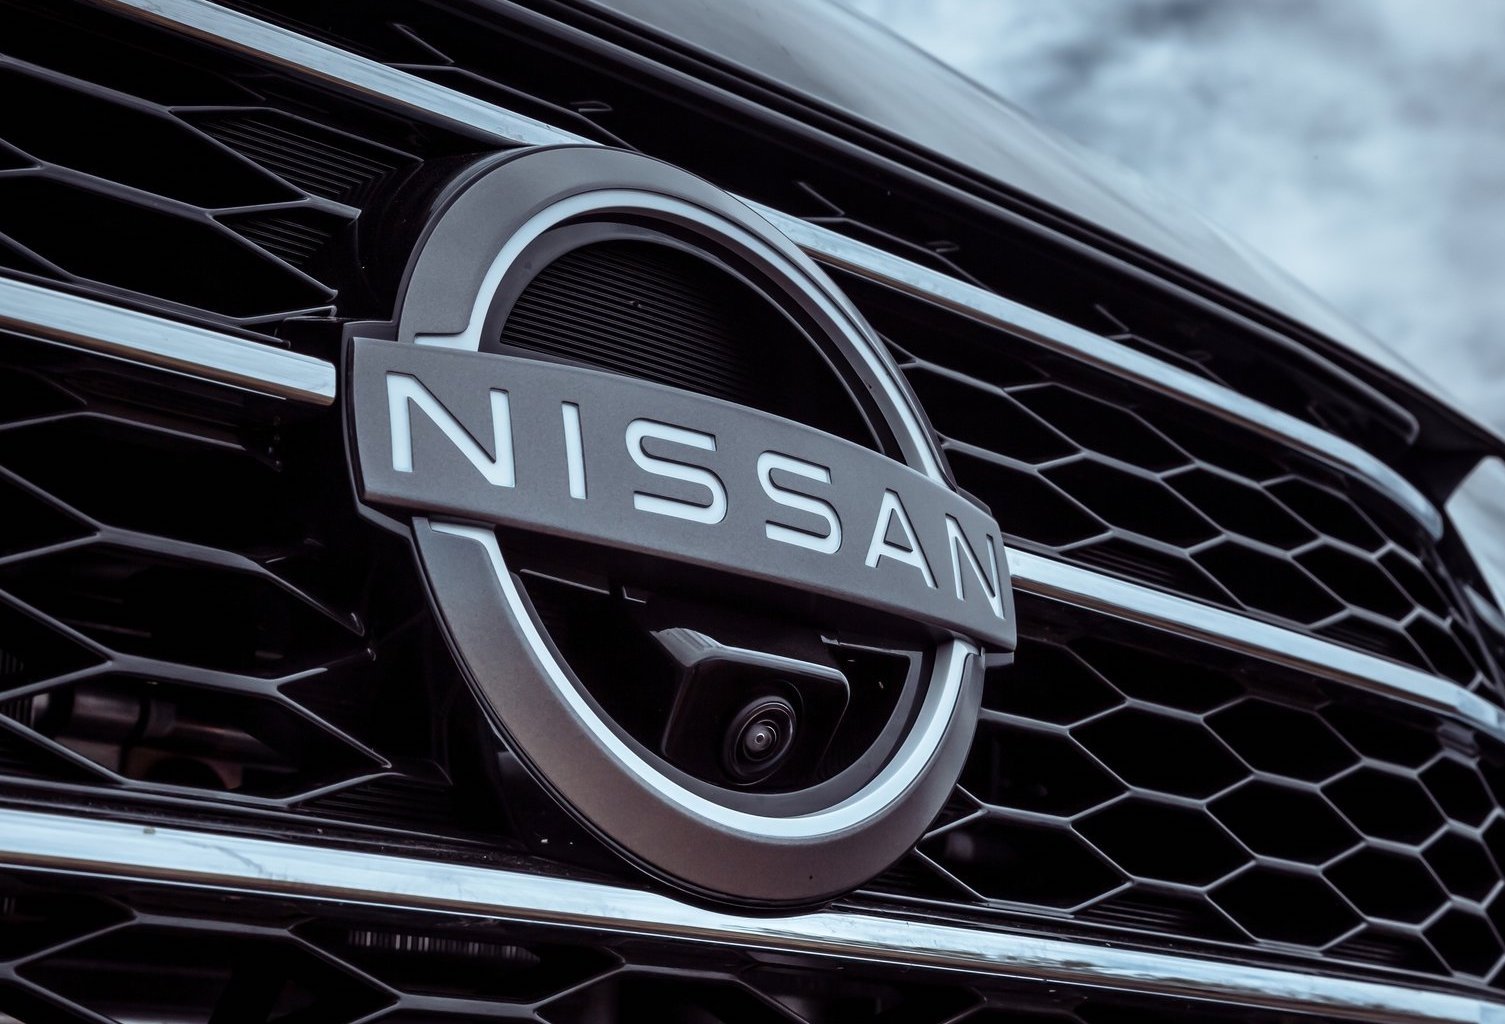 Nissan exits Russian market, sells facilities for 1 euro